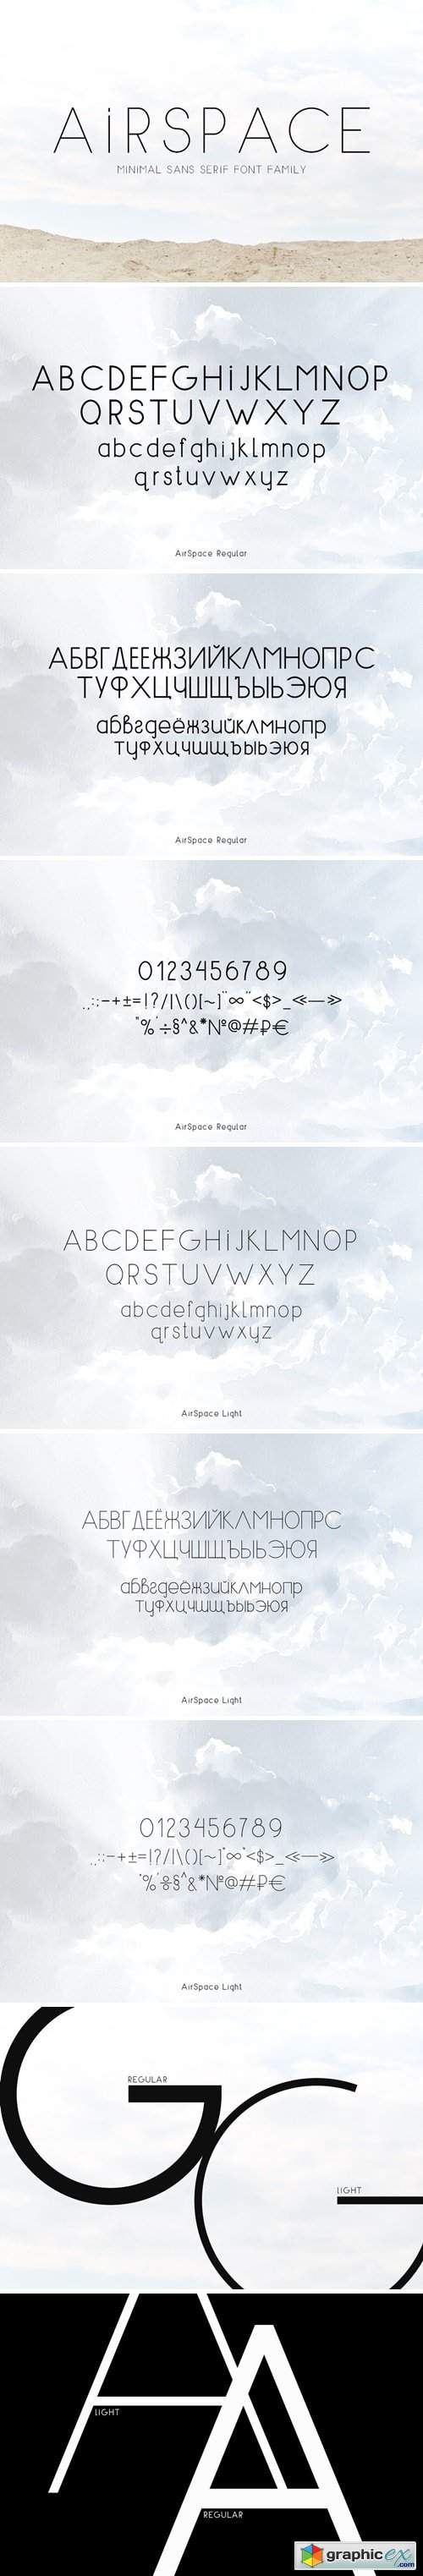 AIRSPACE | Minimal Sans Serif Font